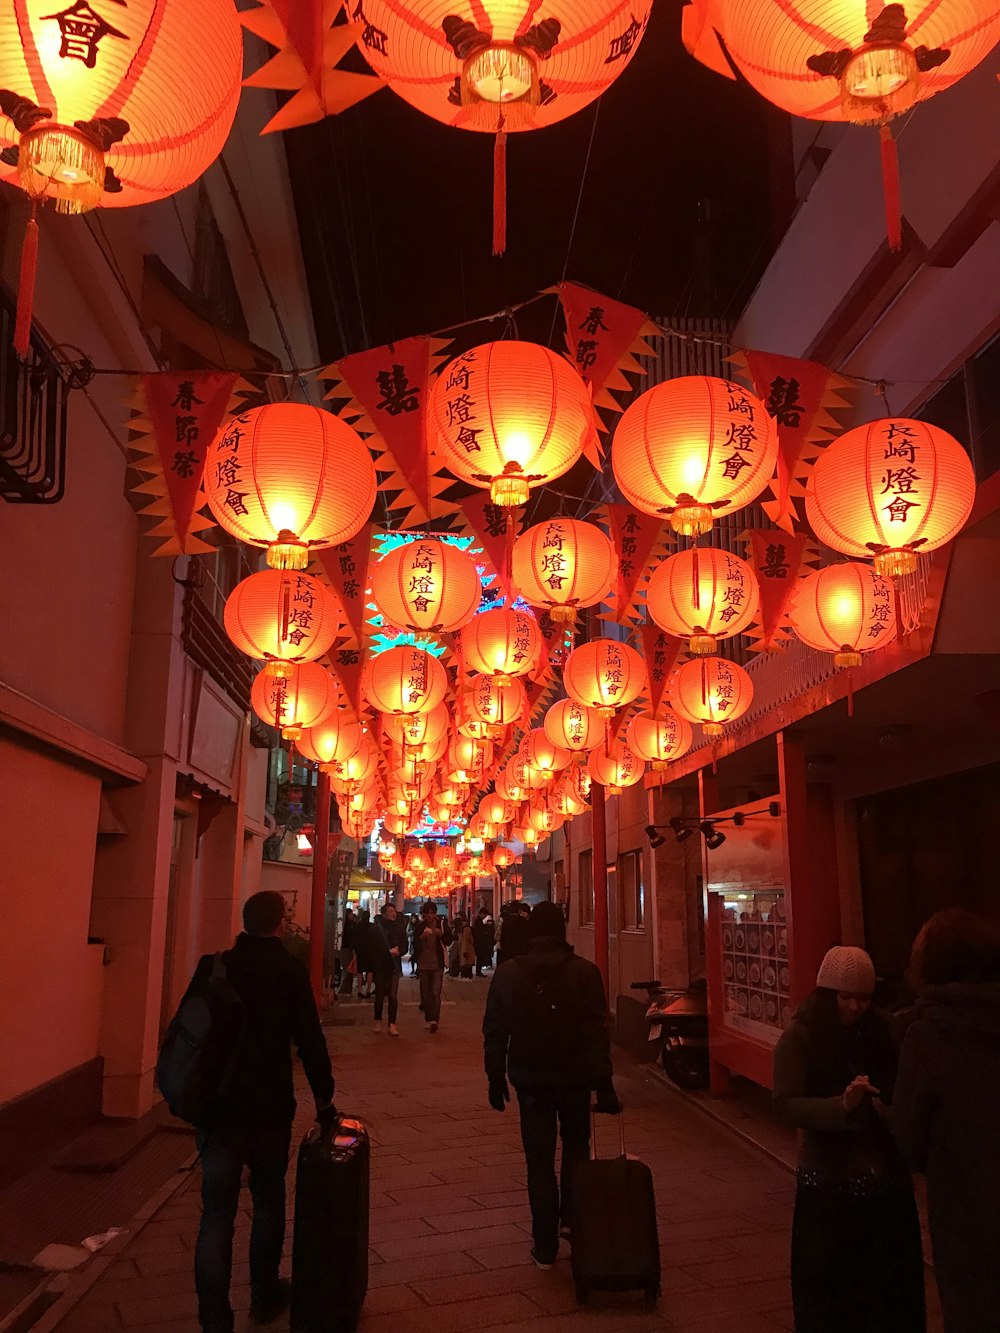 Chinese lanterns hung above people